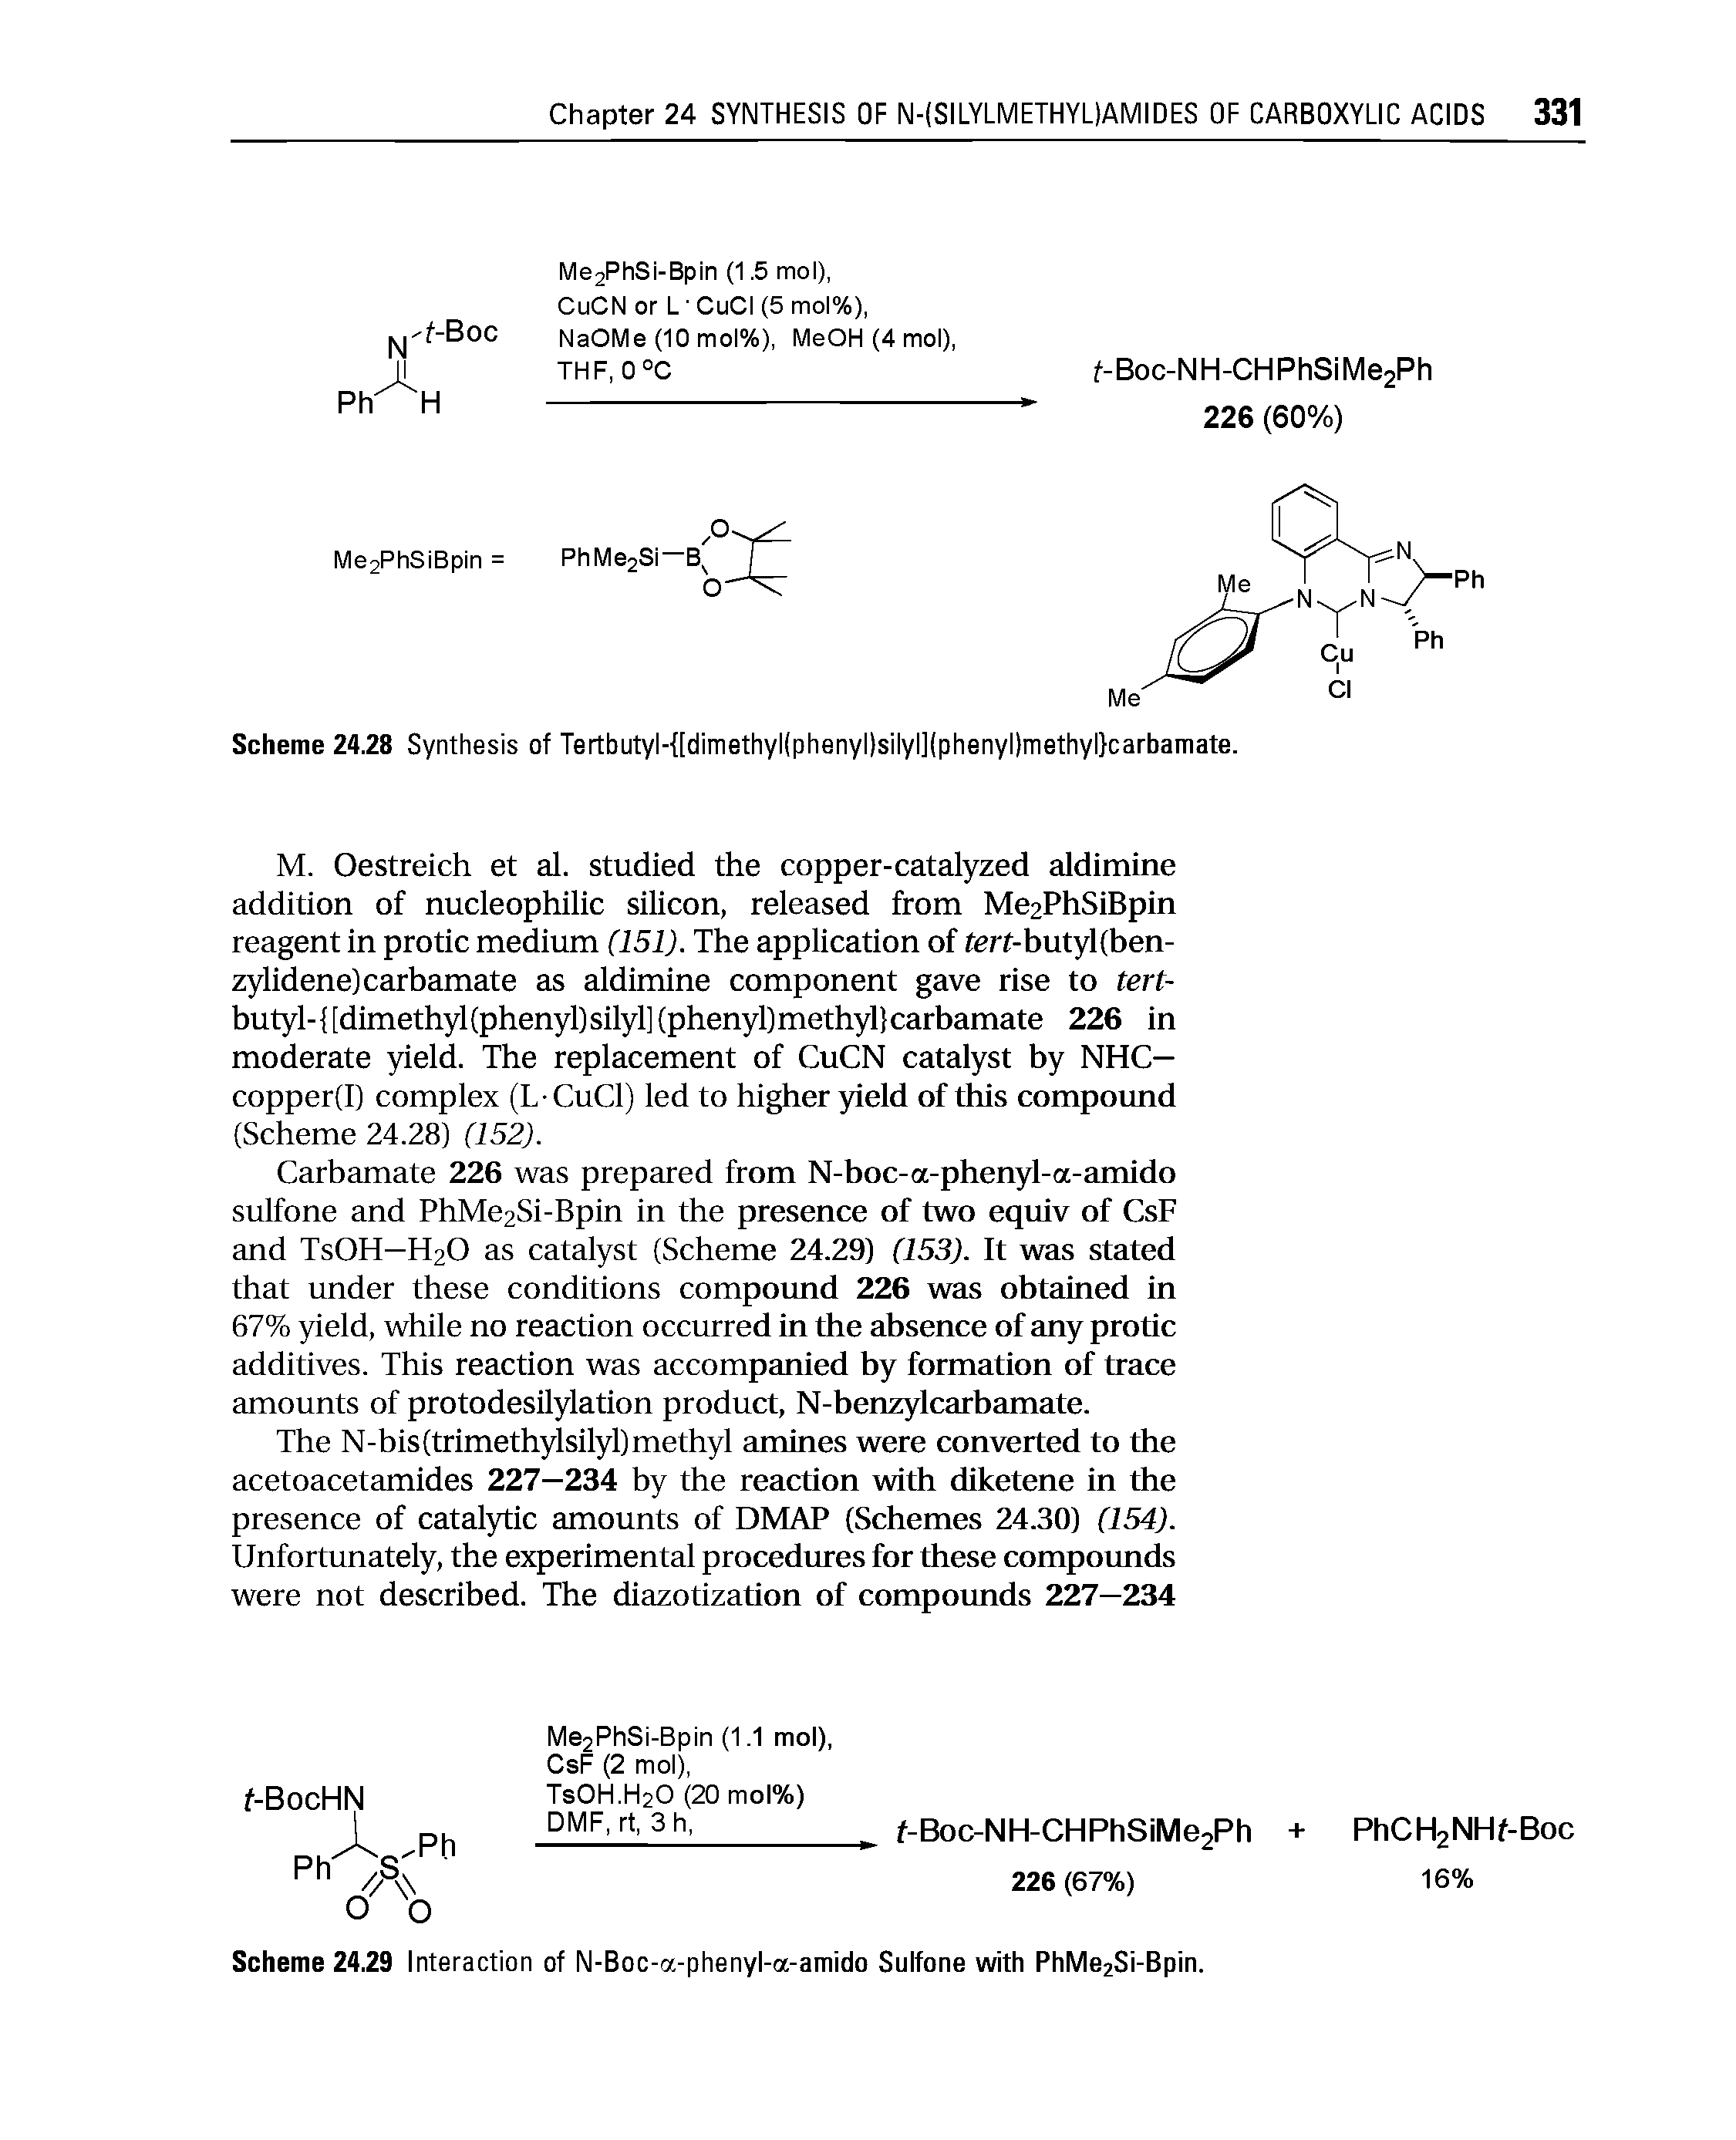 Scheme 24.28 Synthesis of Tertbutvl- [dimethvl(ph8nvl)silyl](phenyl)methyl carbamate.